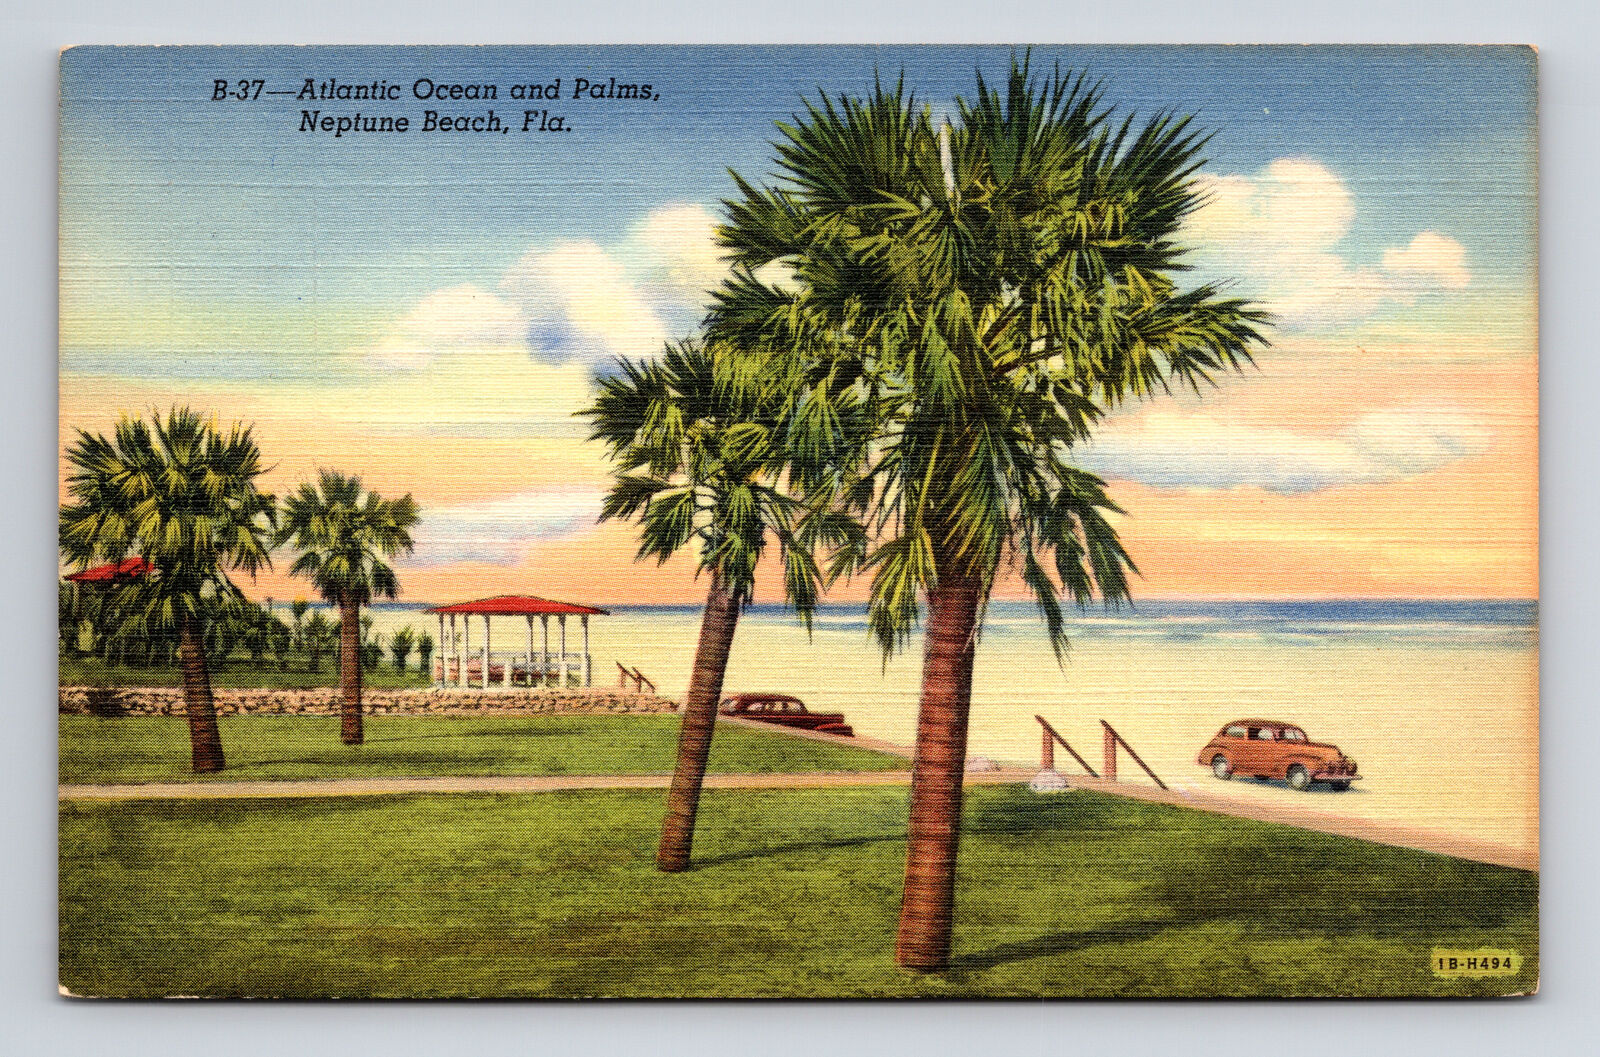 c1941 Linen Postcard Neptune Beach FL Florida Atlantic Ocean and Palms Cars